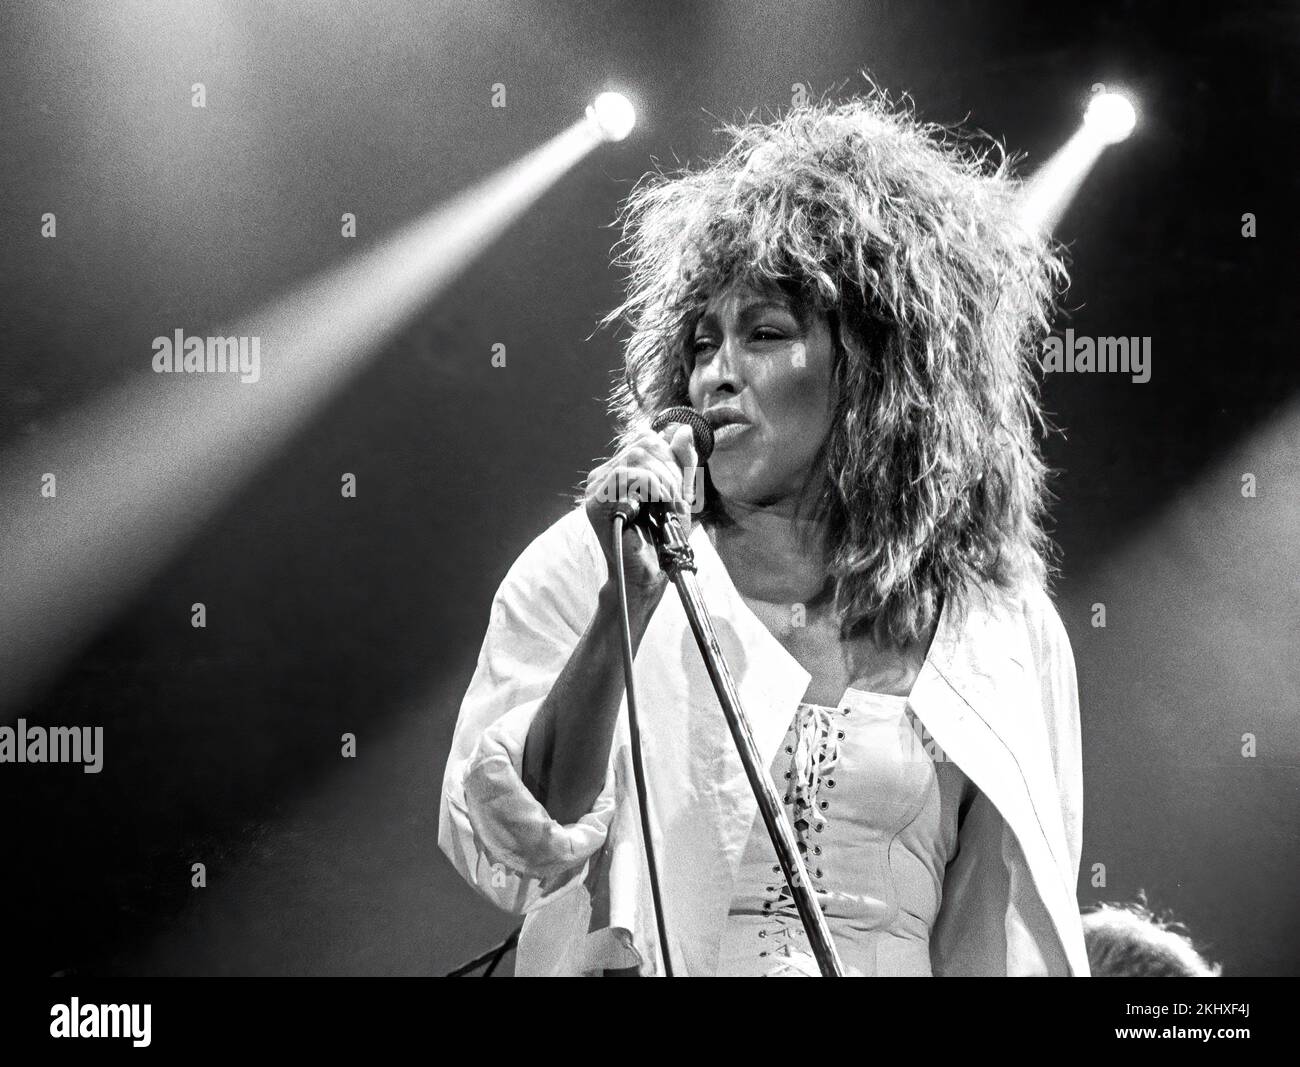 Tina Turner in concert  in Ahoy Rotterdam Holland. 1985- Private Dancer Tour. vvbvanbree fotografie Stock Photo